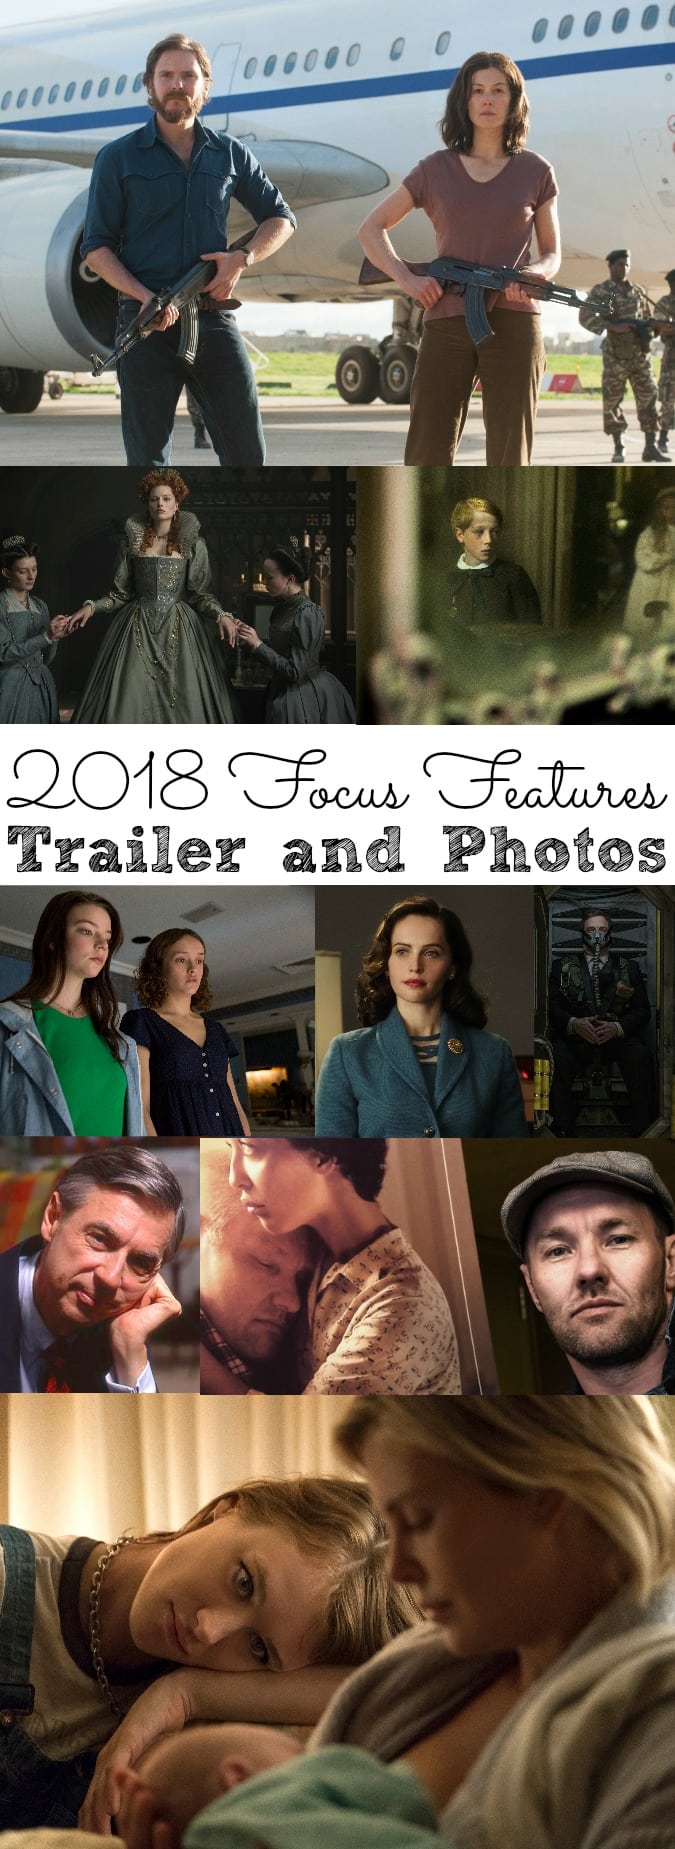 2018 Focus Features Trailer and Photos - simplytodaylife.com